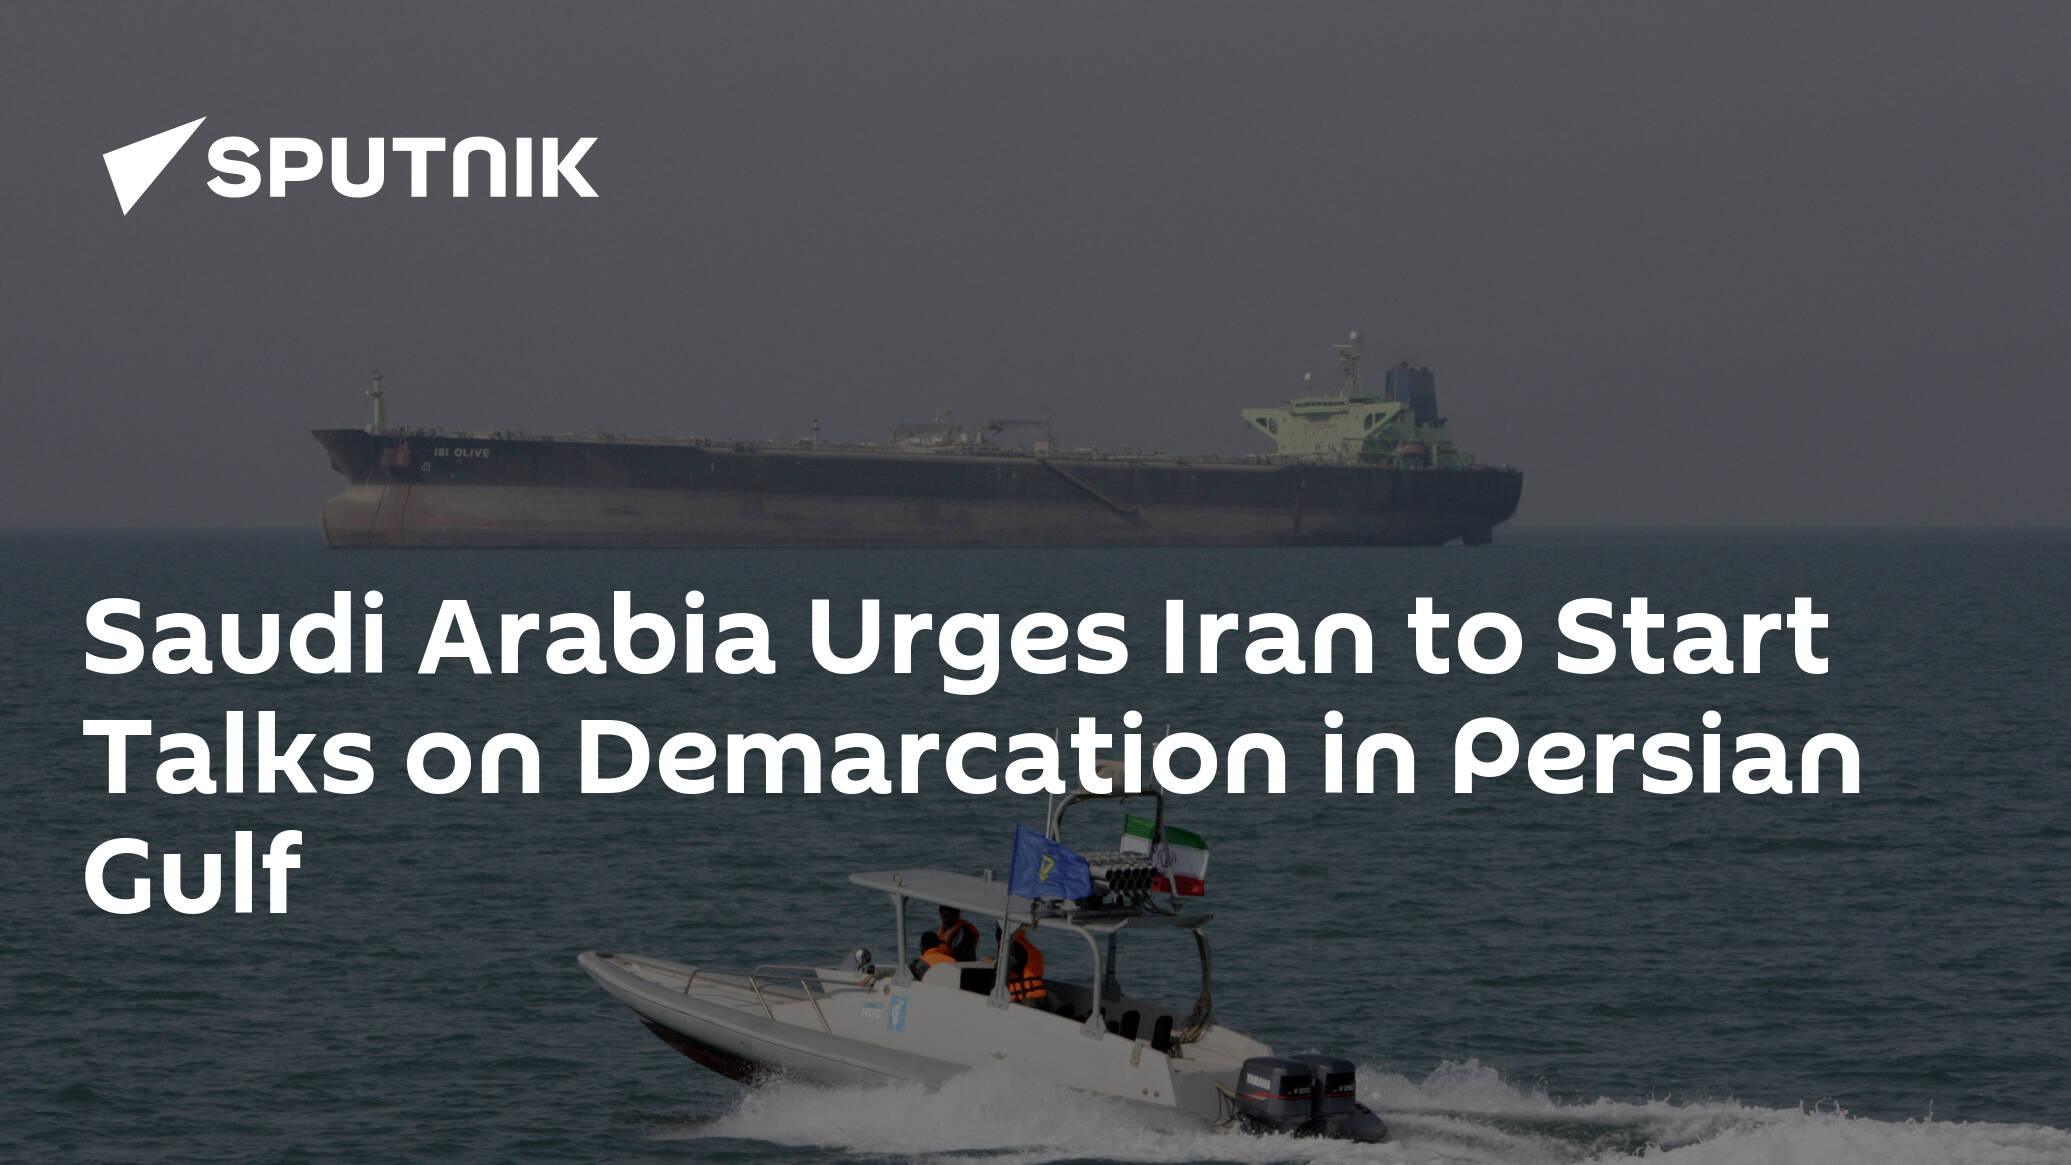 Saudi Arabia Urges Iran to Start Talks on Demarcation in Persian Gulf